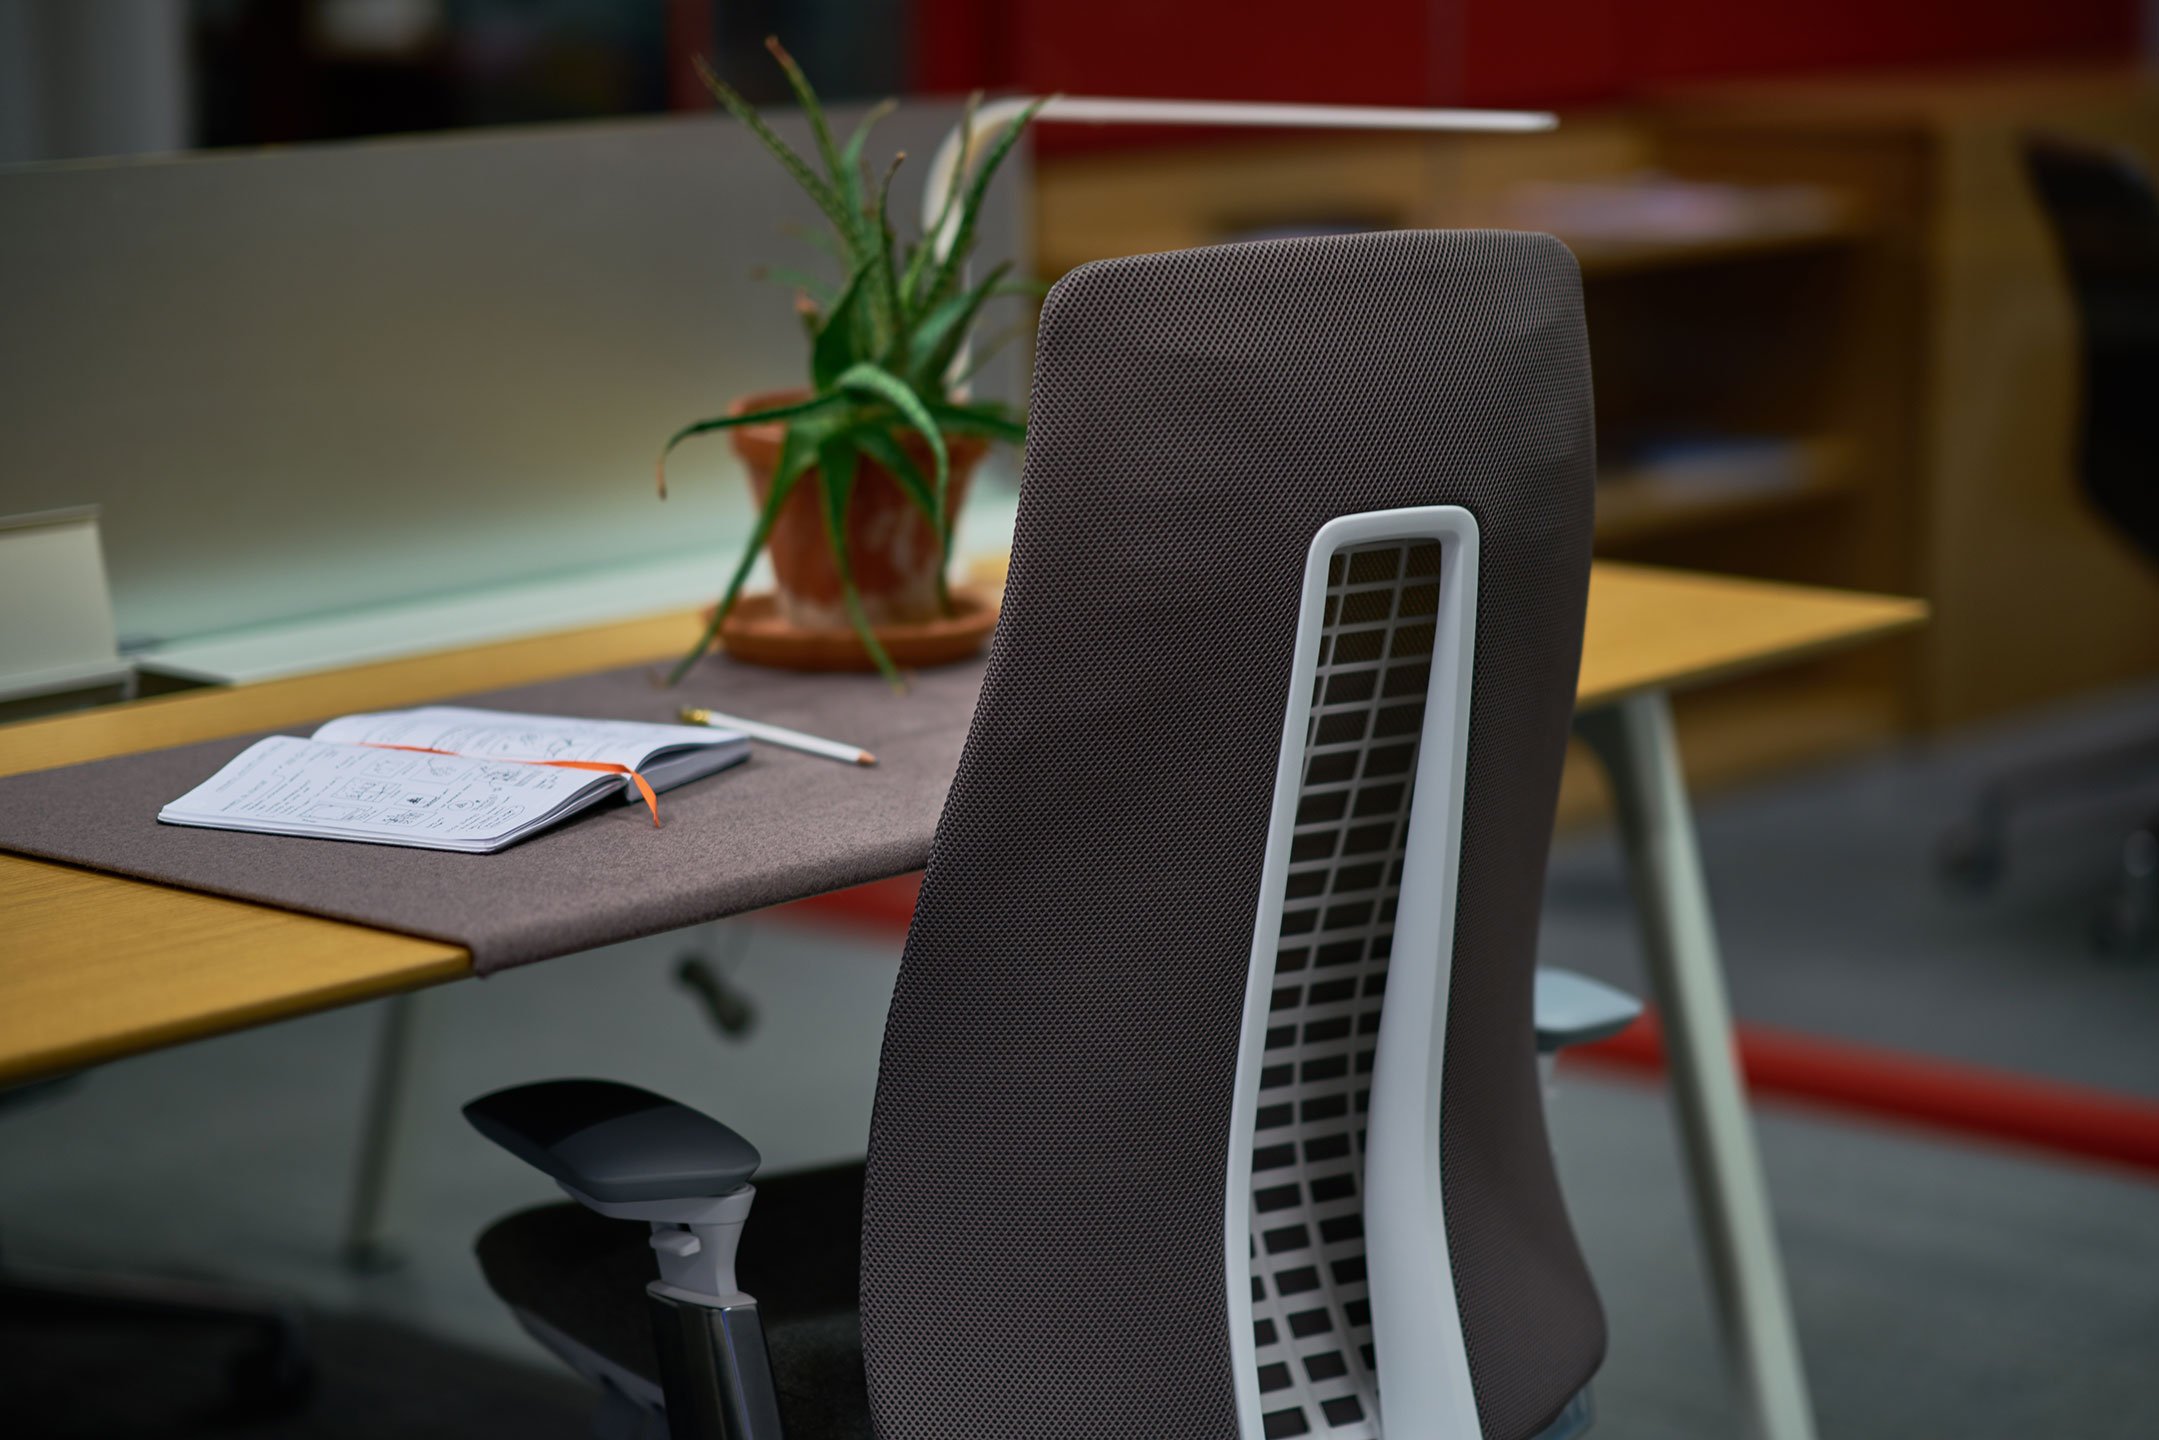 Haworth Fern task chair in dark grey with a desk in a office space